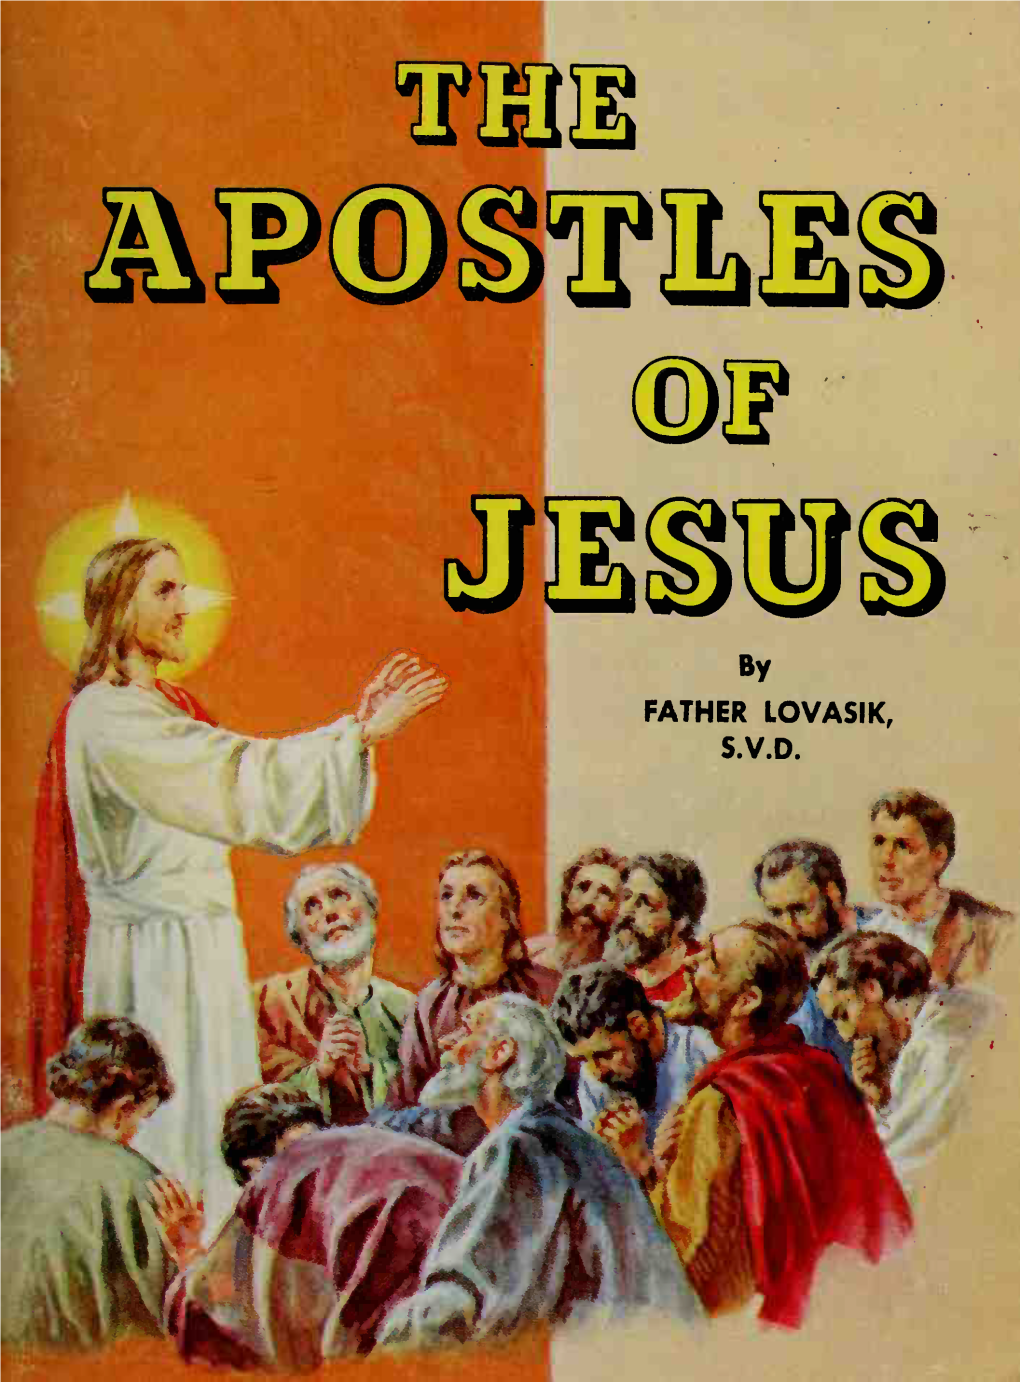 The APOSTLES of JESUS